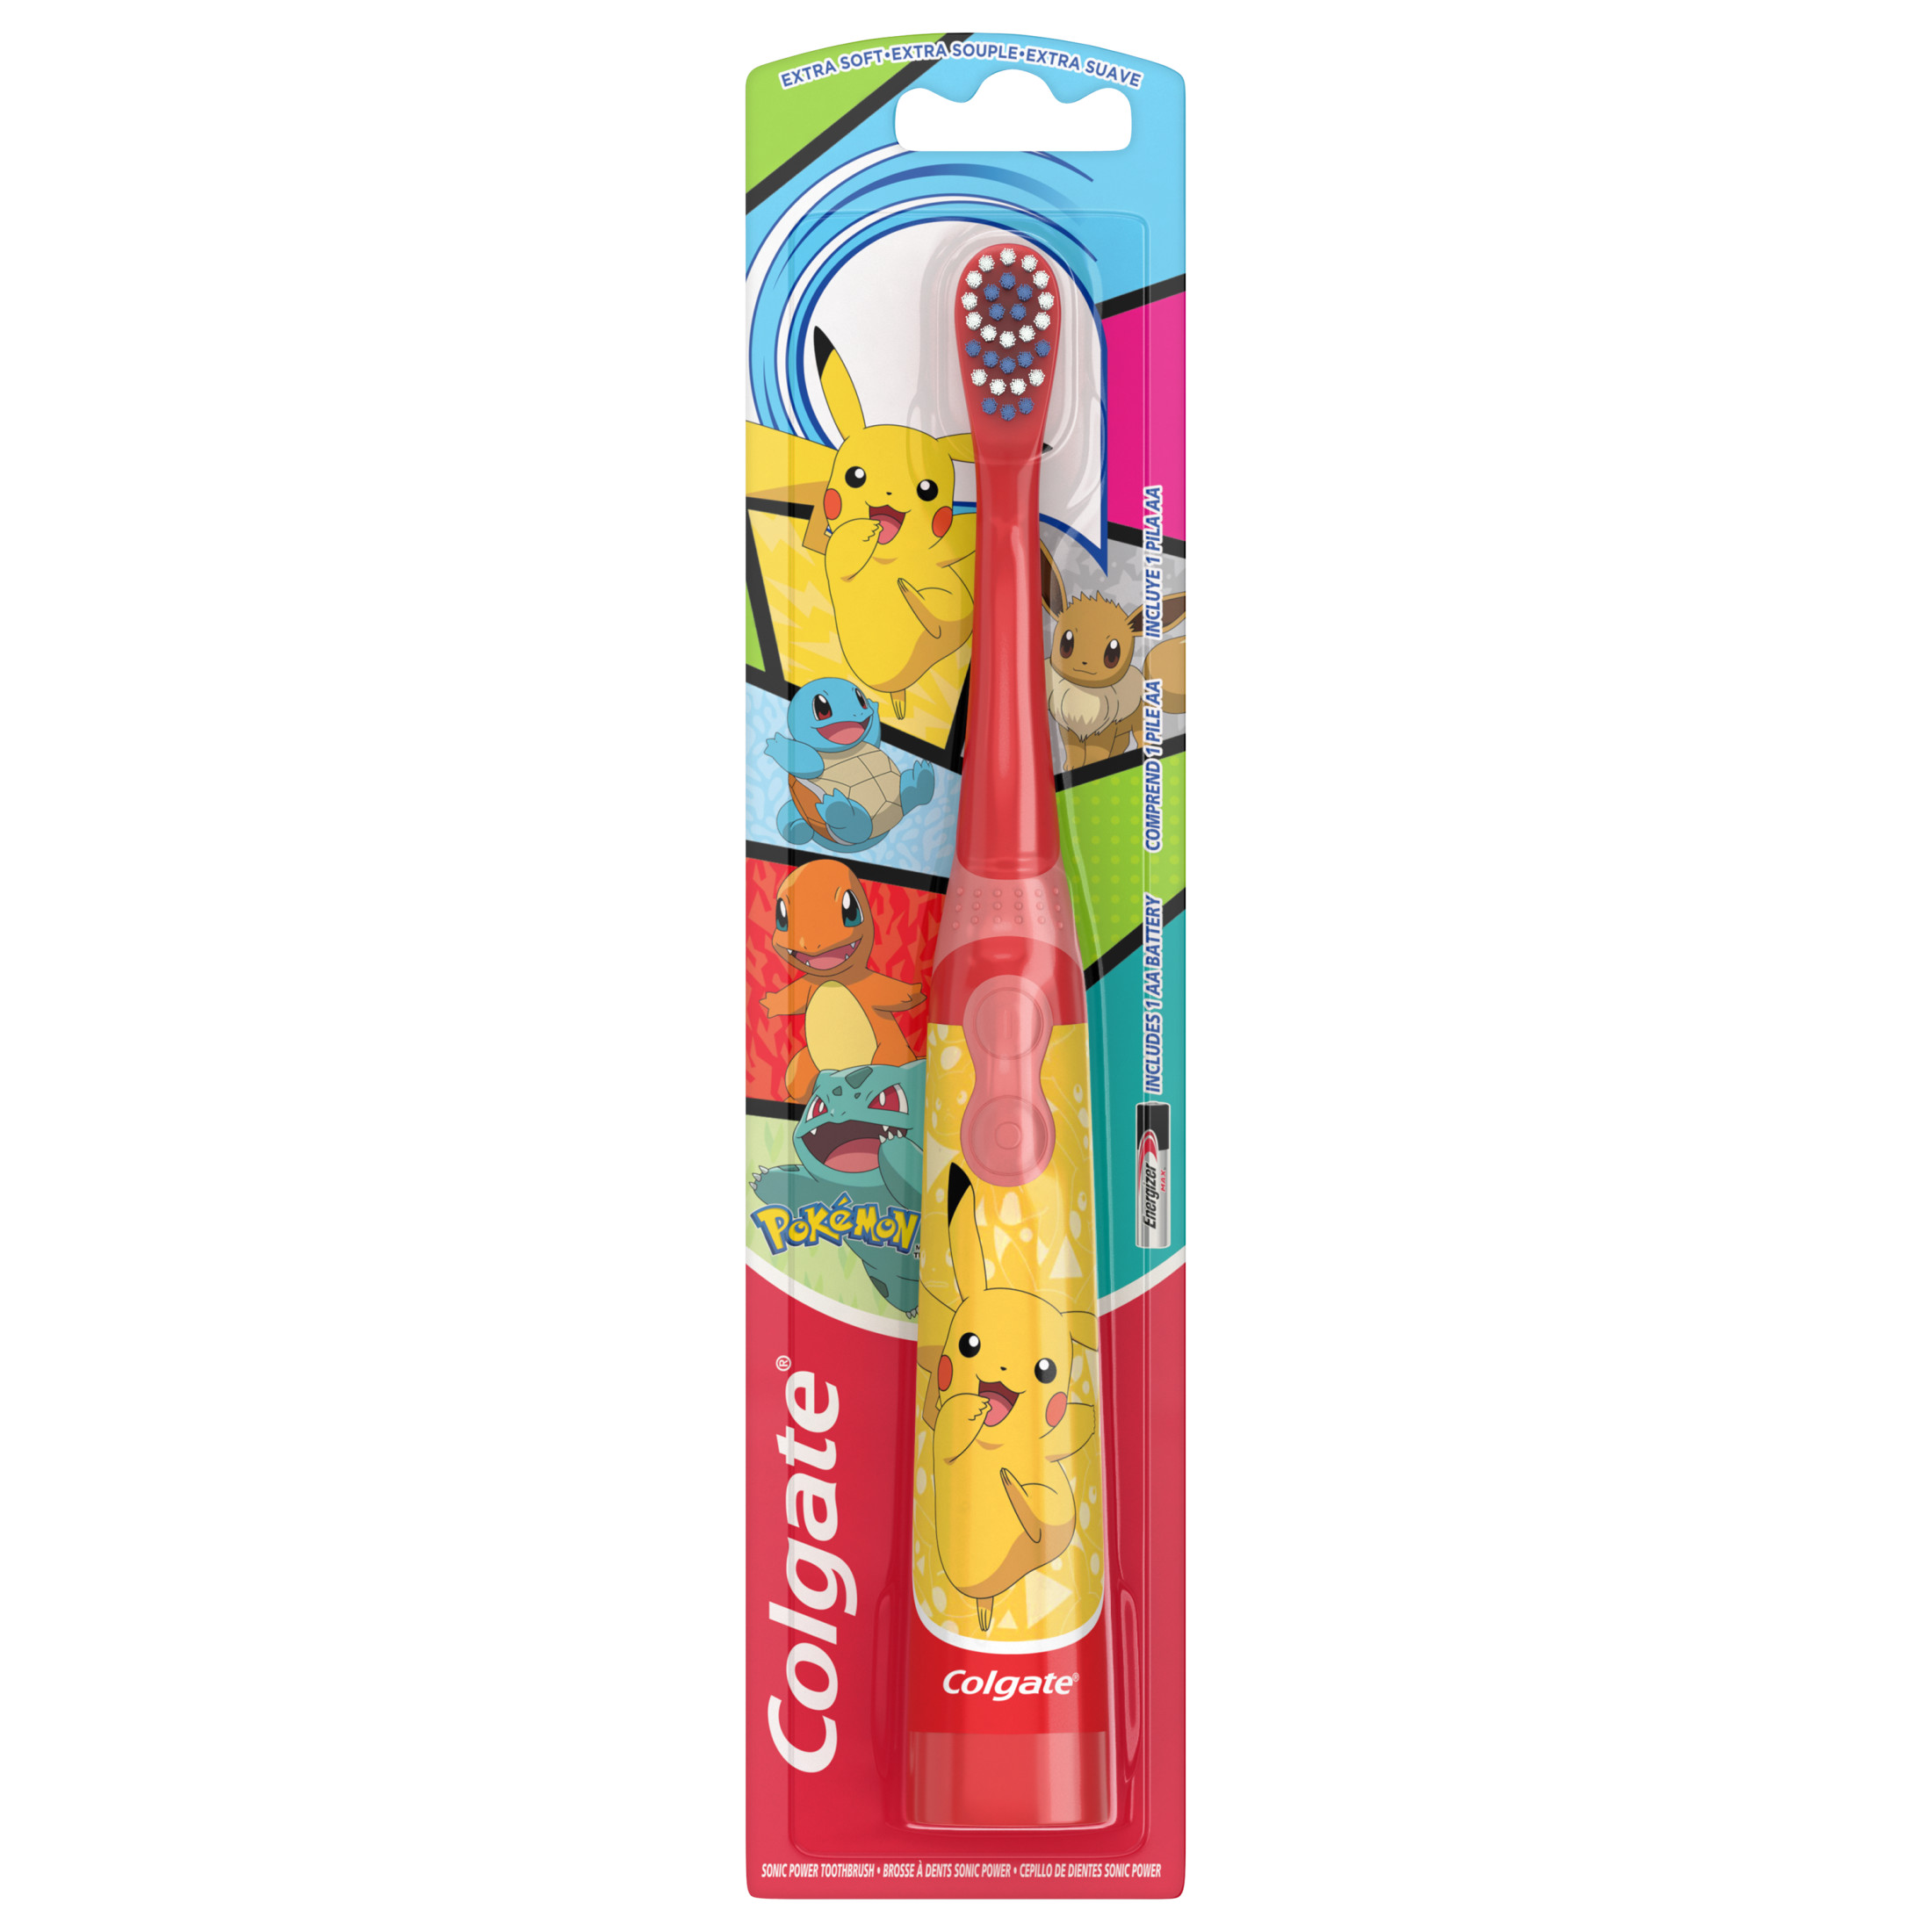 Colgate Kids Battery Toothbrush, Pokemon Toothbrush, 1 Pack - image 1 of 9